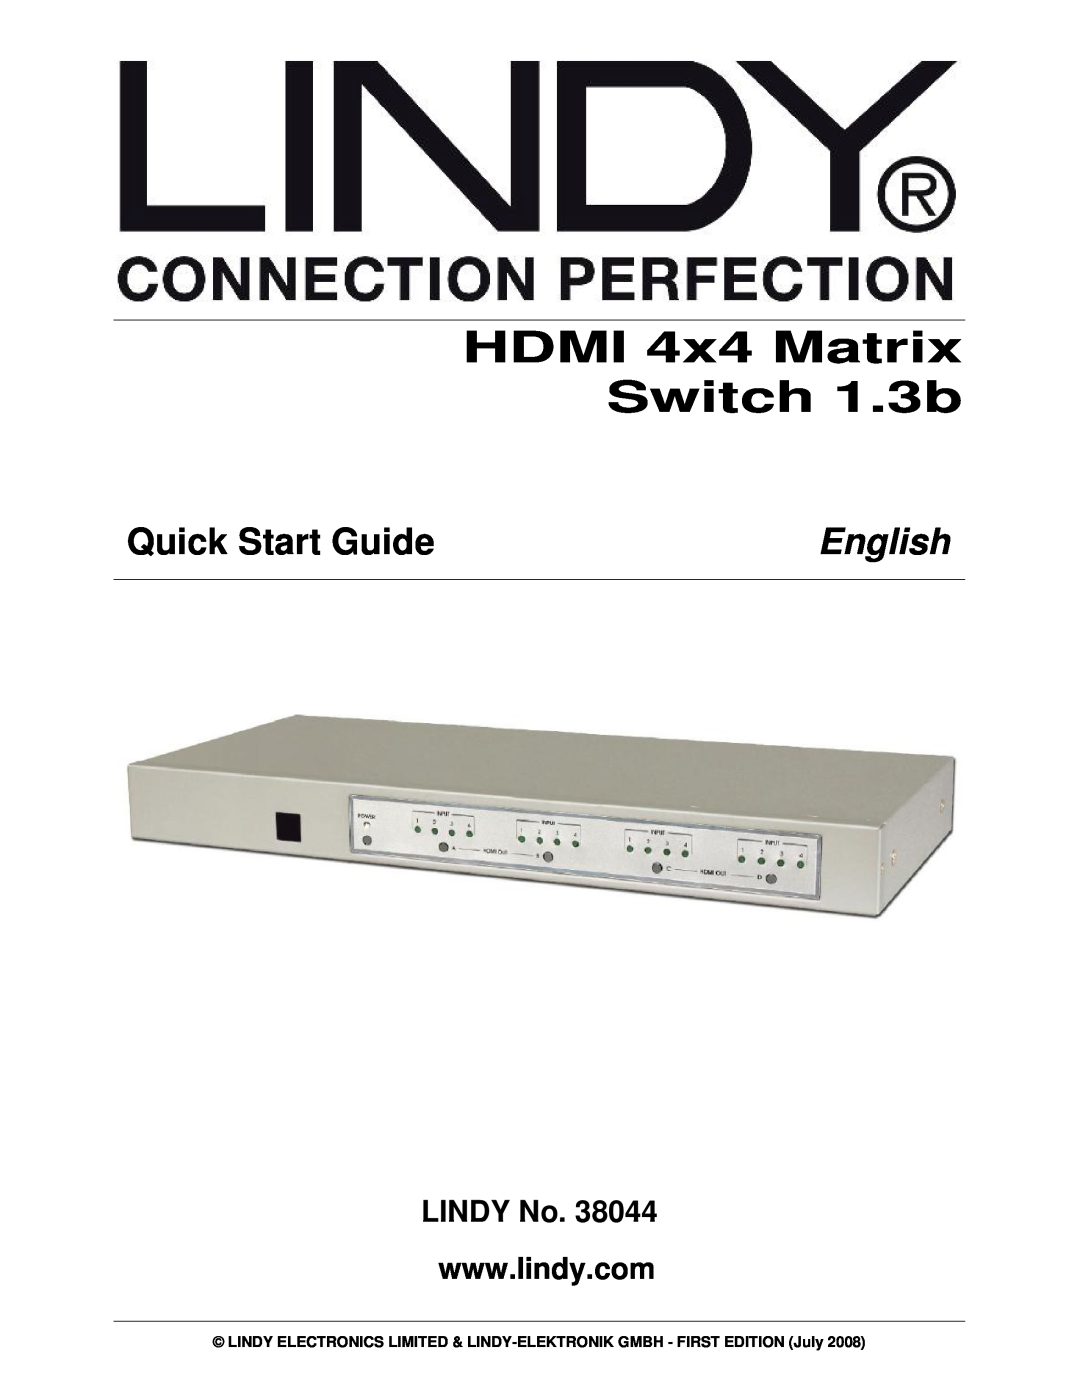 Lindy 38044 quick start HDMI 4x4 Matrix Switch 1.3b, Quick Start Guide, English, LINDY No 